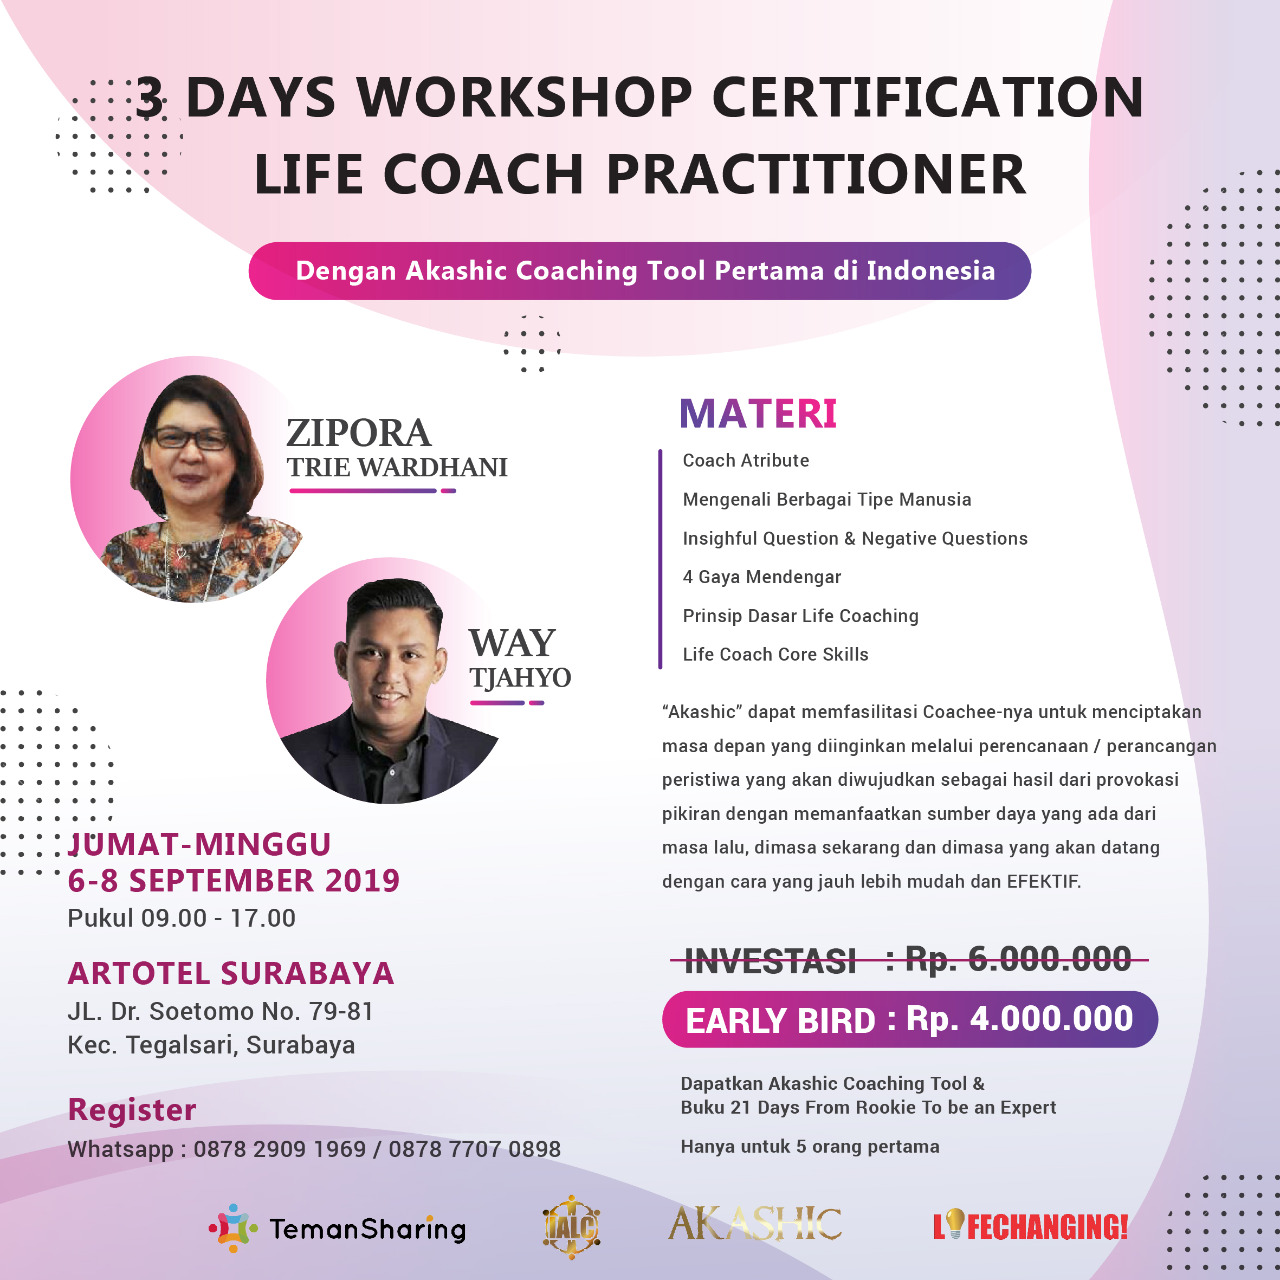 (Surabaya) 3 Days Workshop Certification Life Coach Practitioner